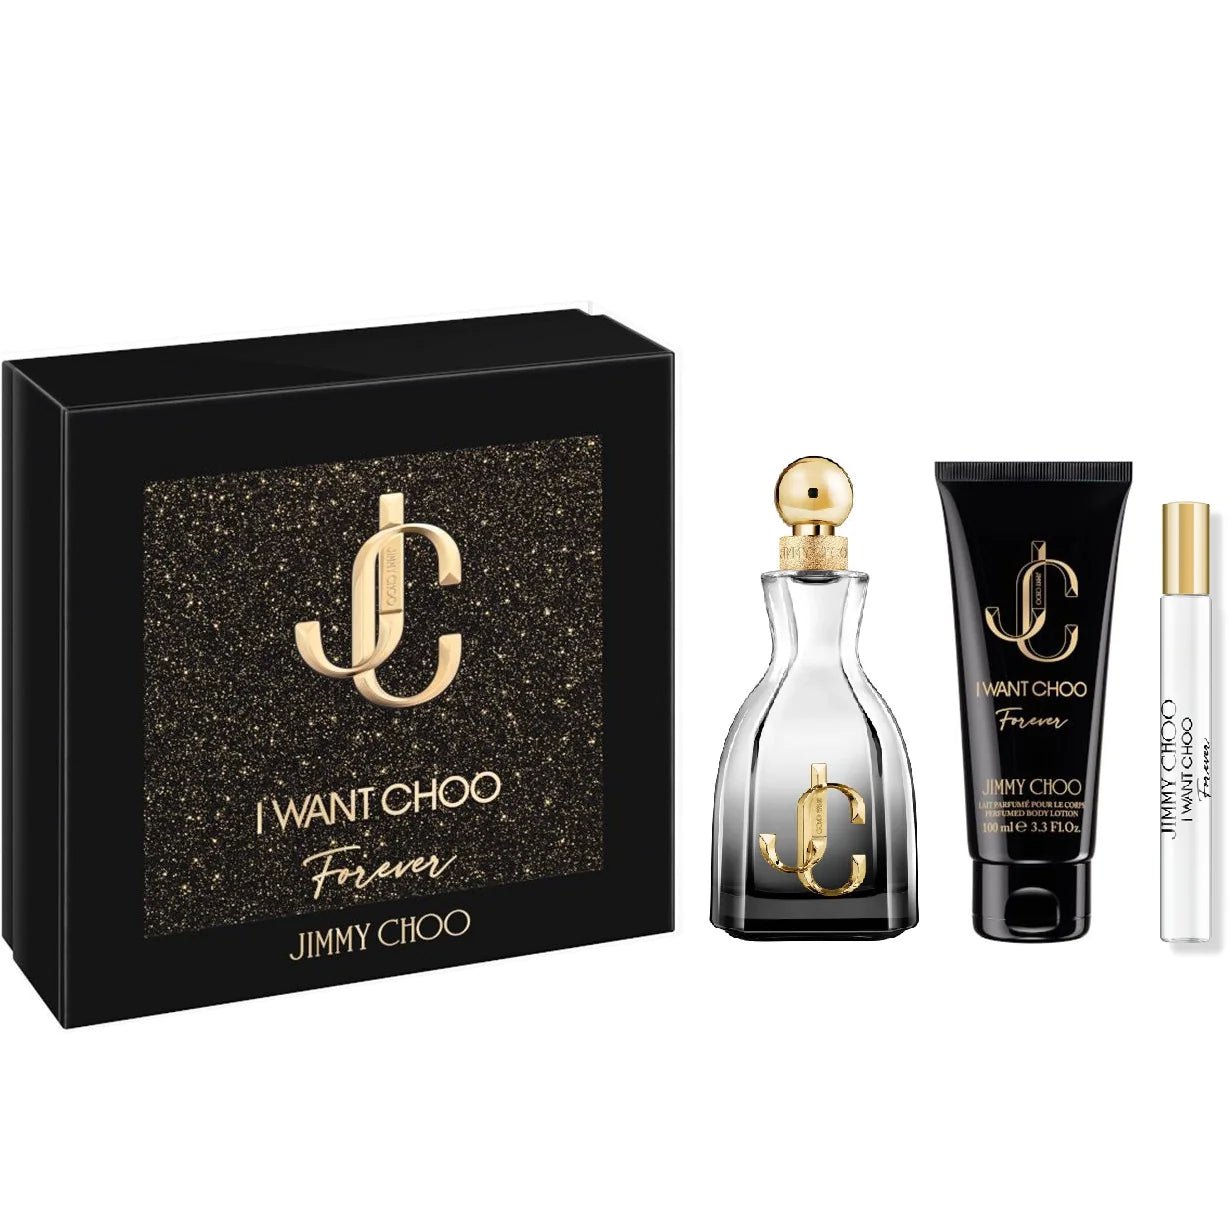 Jimmy Choo I Want Choo Forever EDP Body Lotion Indulgence Set | My Perfume Shop Australia